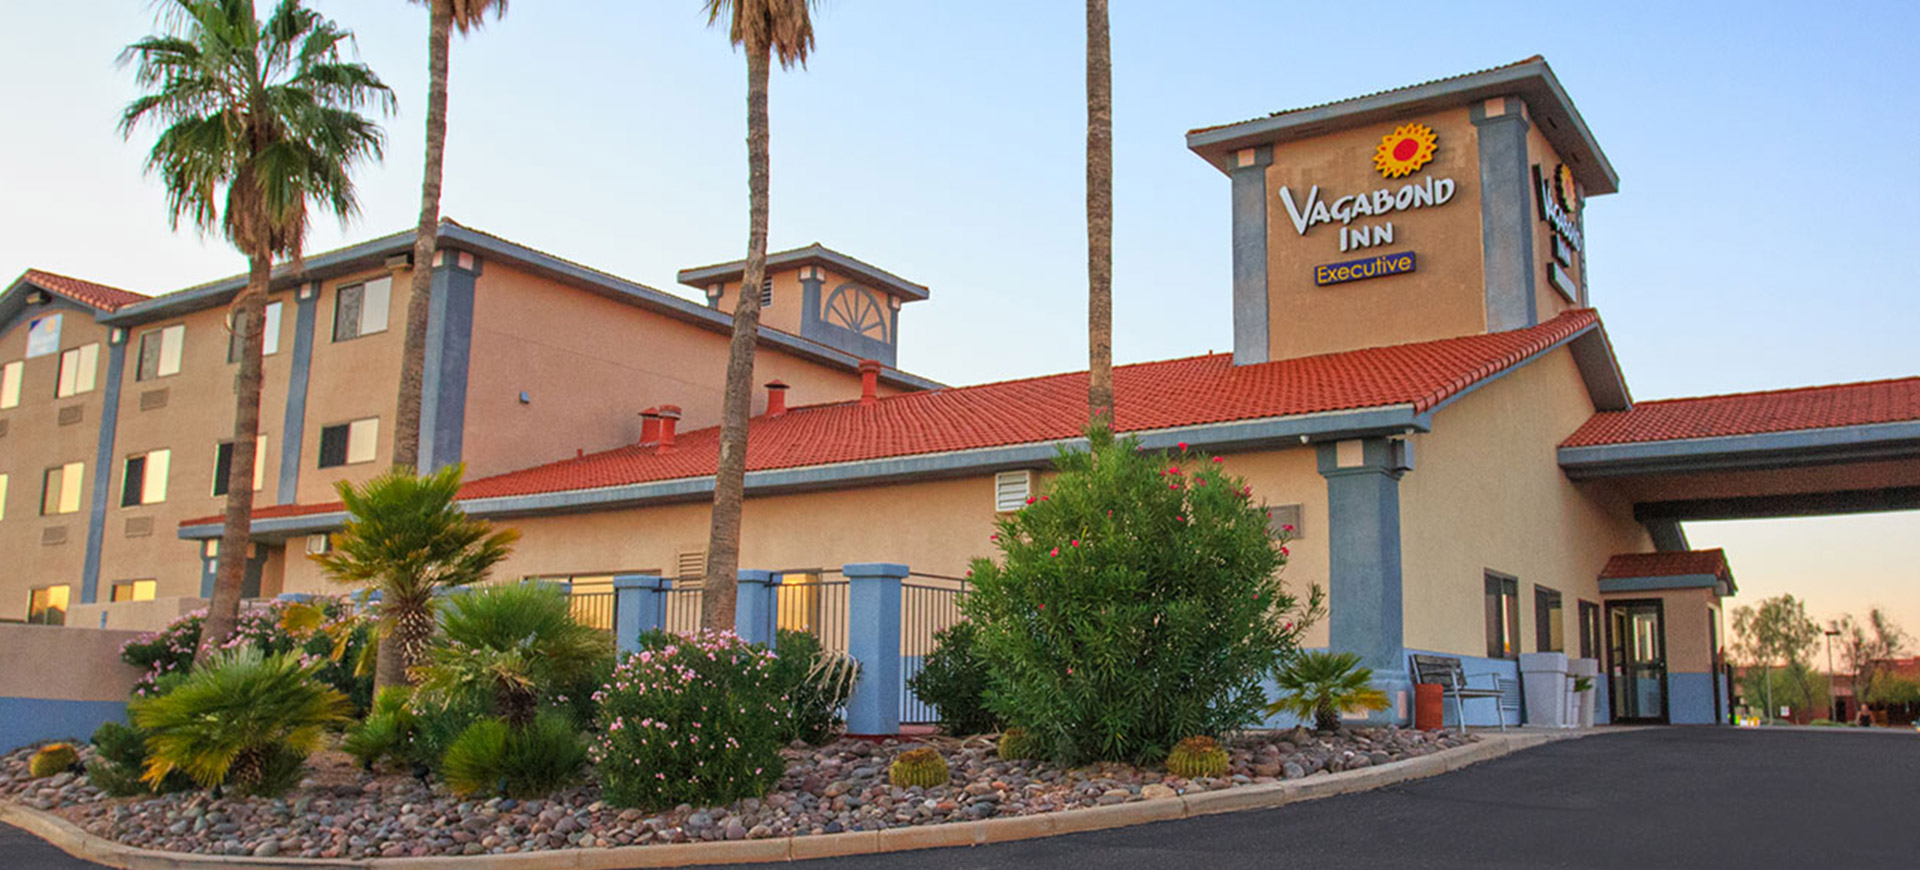 Northern træfning Overstige Affordable West Coast, California Hotels - Vagabond Inn Hotels